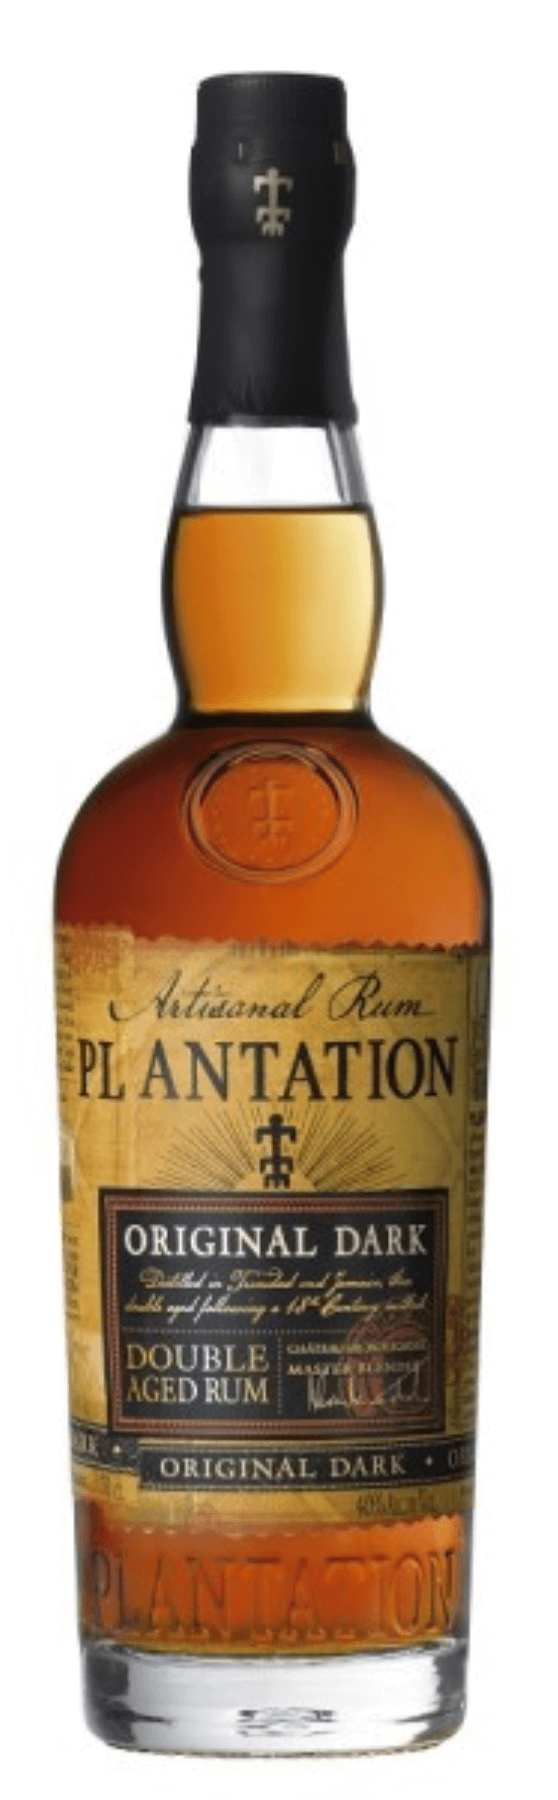 Plantation Original Dark Rum 40% vol.